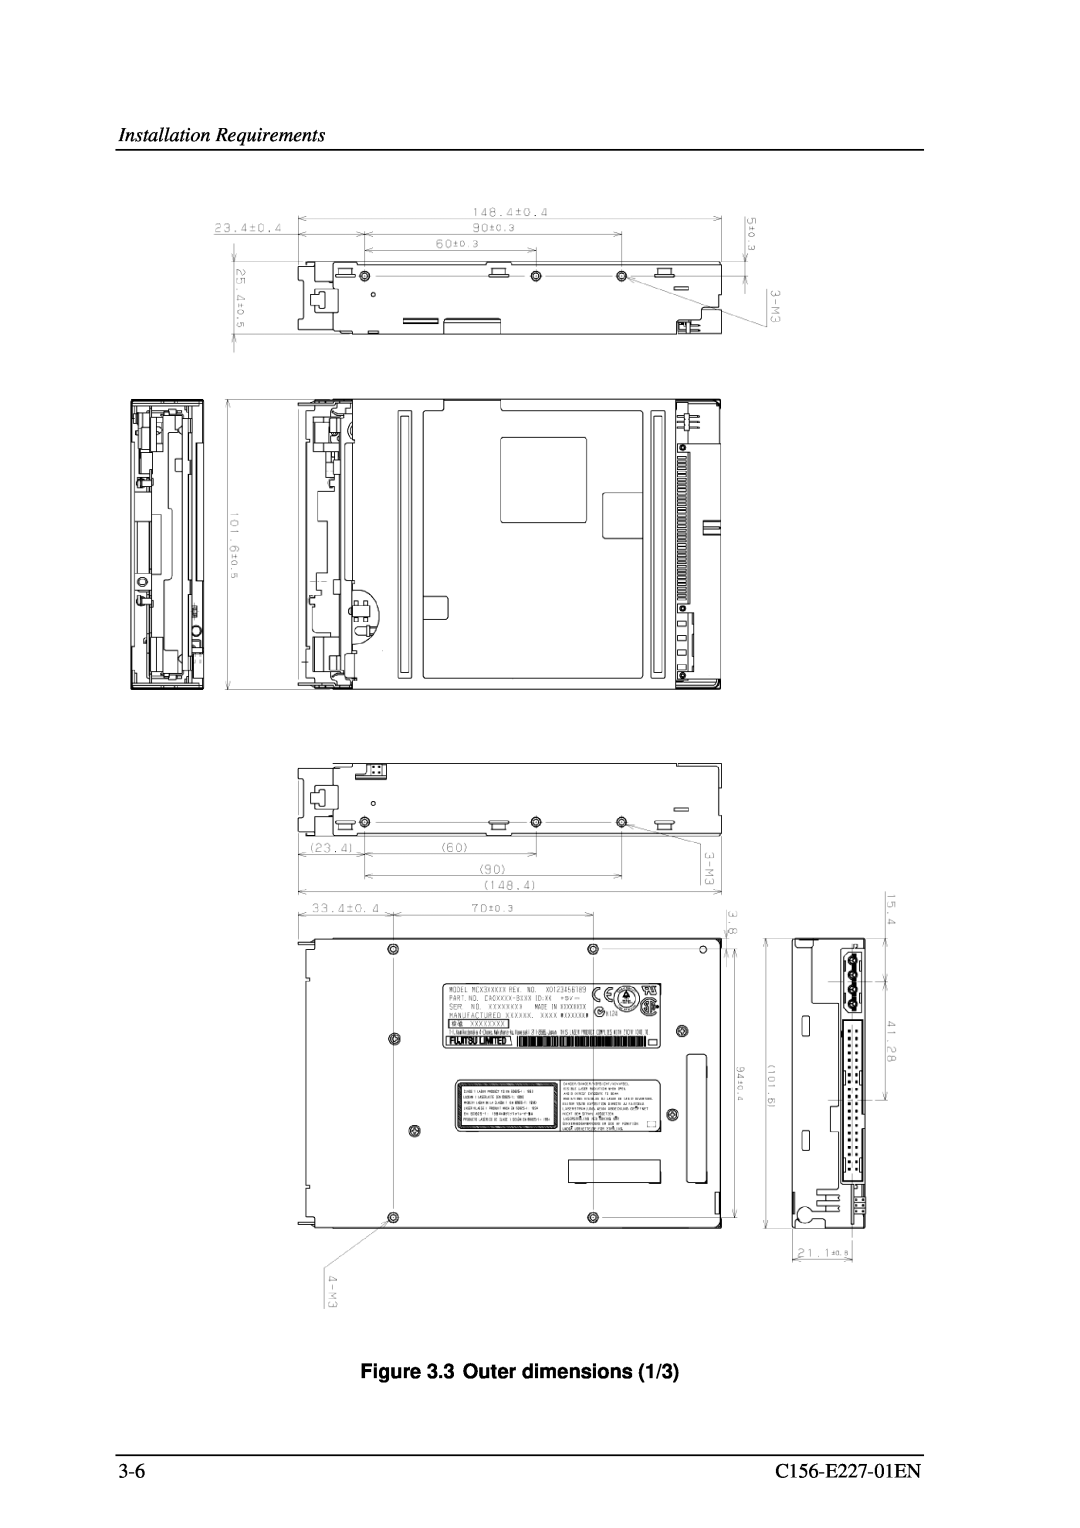 Fujitsu MCM3064AP, MCM3130AP manual 3 Outer dimensions 1/3, Installation Requirements, C156-E227-01EN 